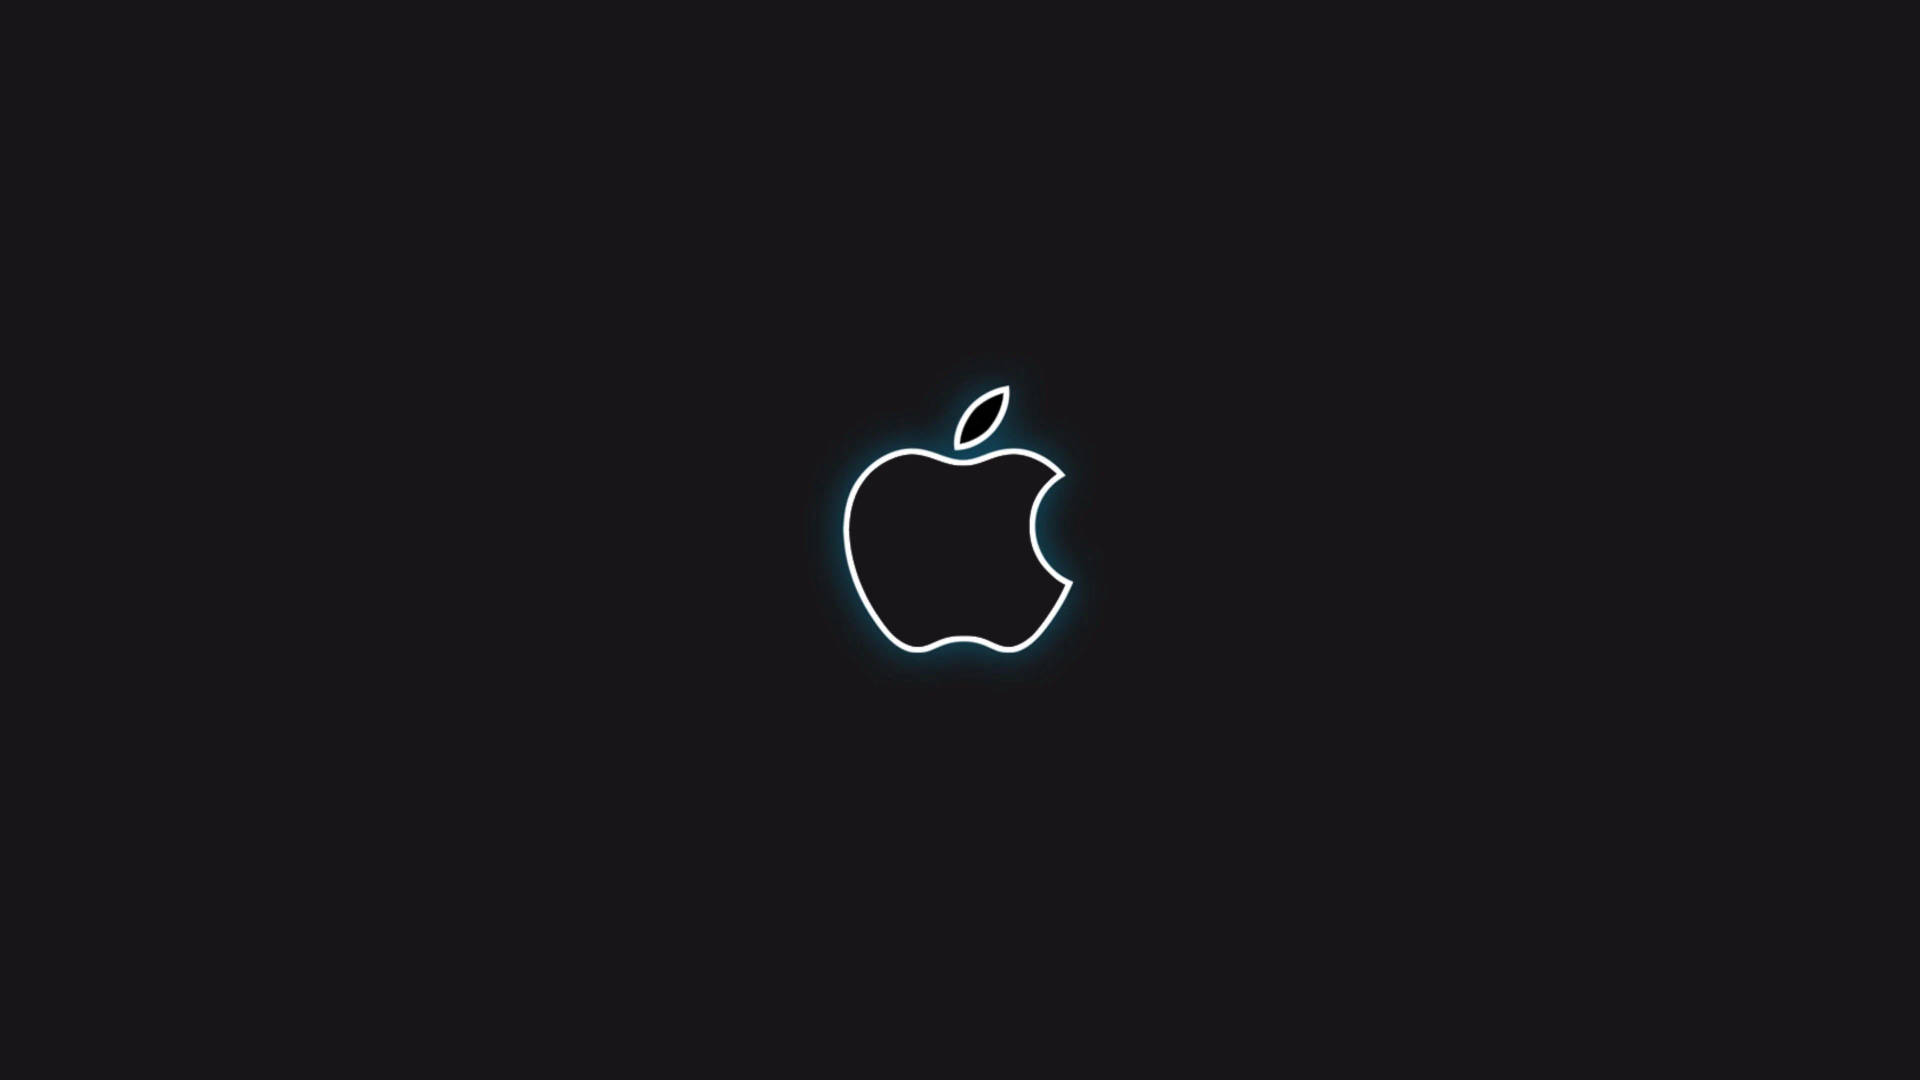 Black And White Apple Logo Background